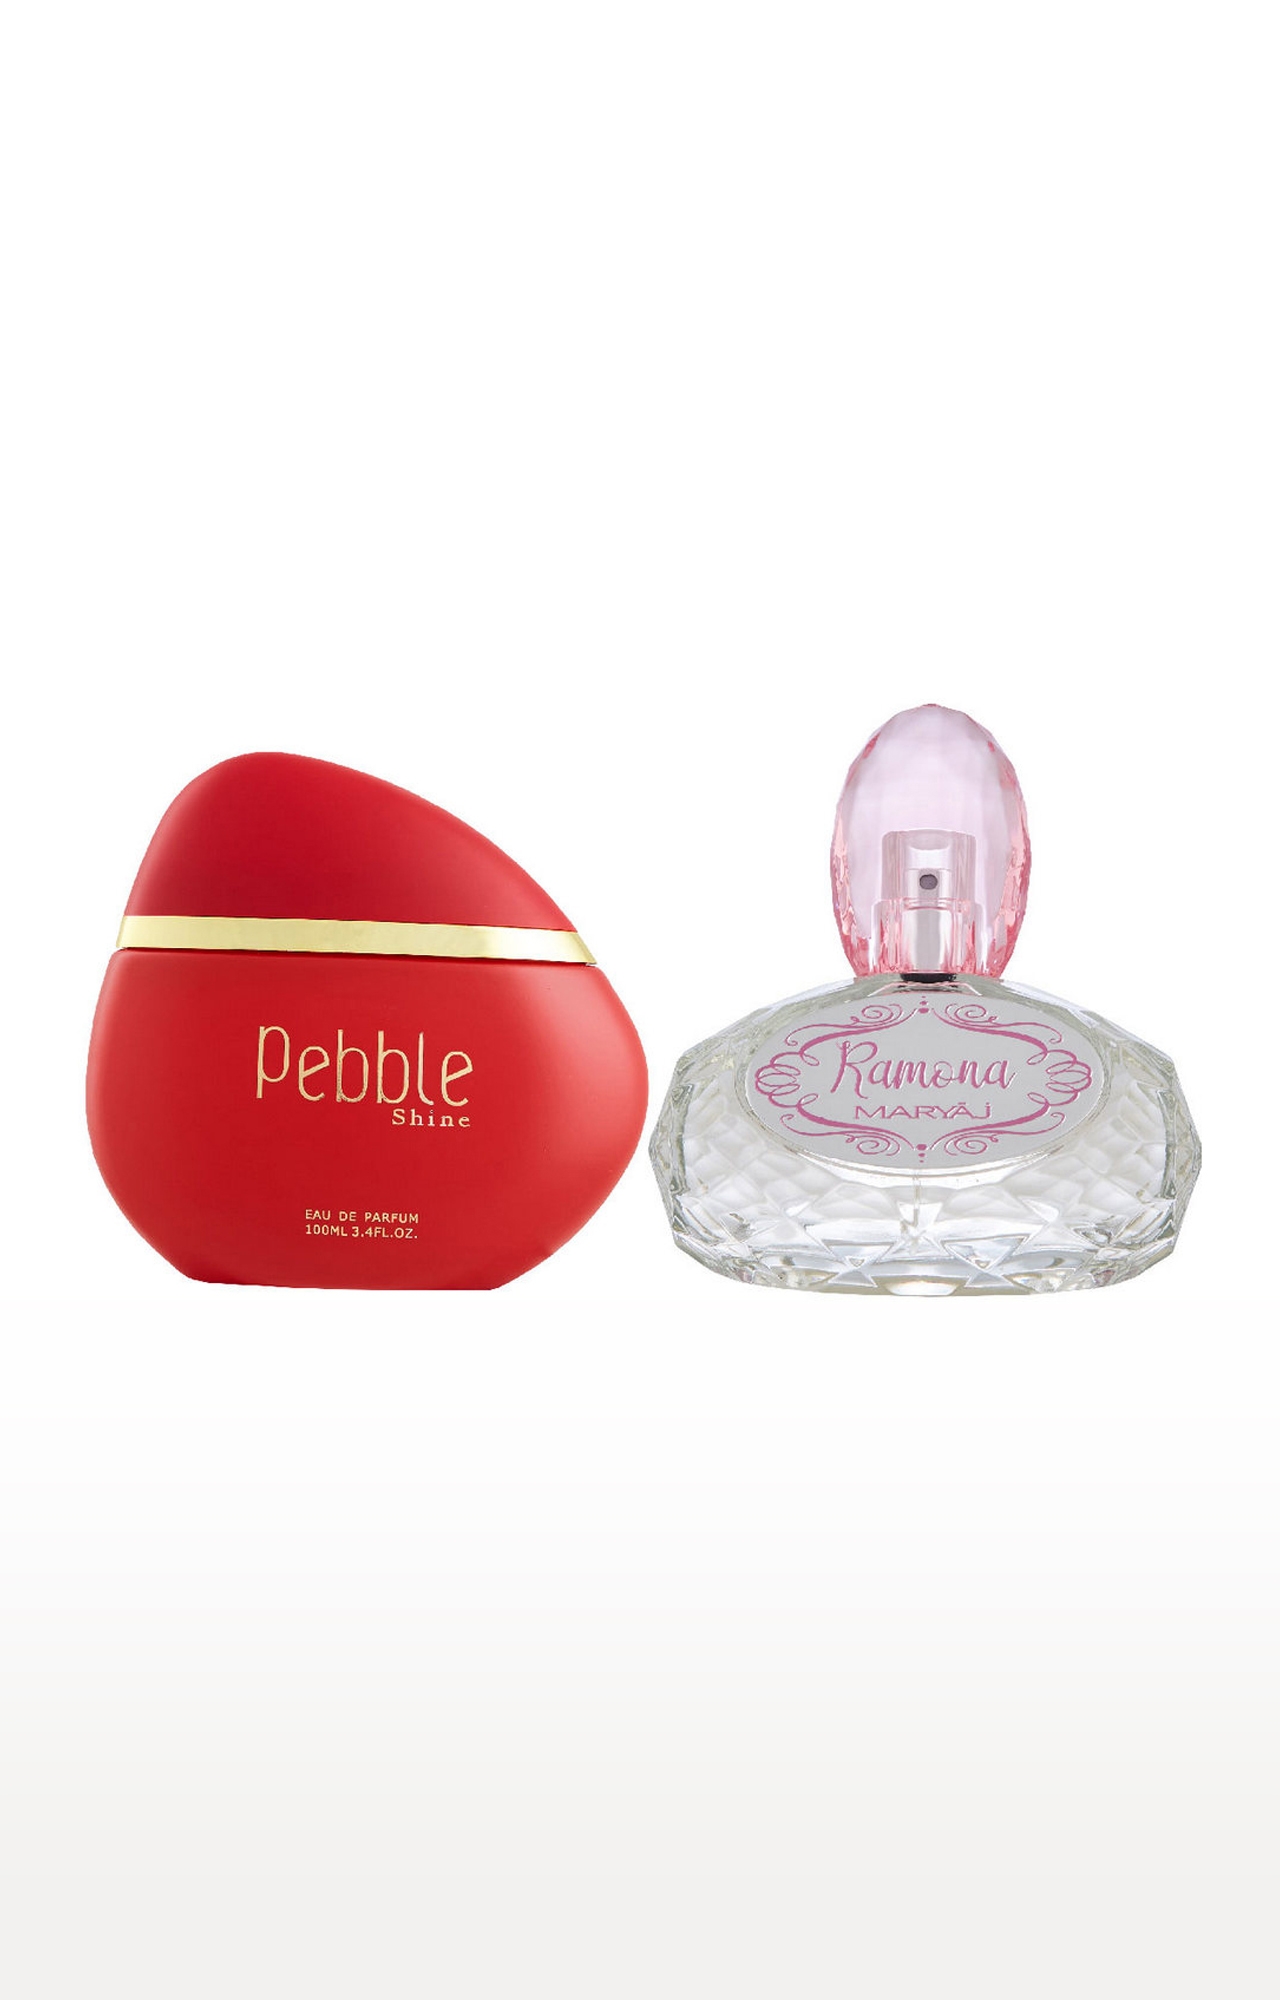 Maryaj Pebble Shine Eau De Parfum Fruity Perfume 100ml for Women and Maryaj Ramona Eau De Parfum Perfume 100ml for Women